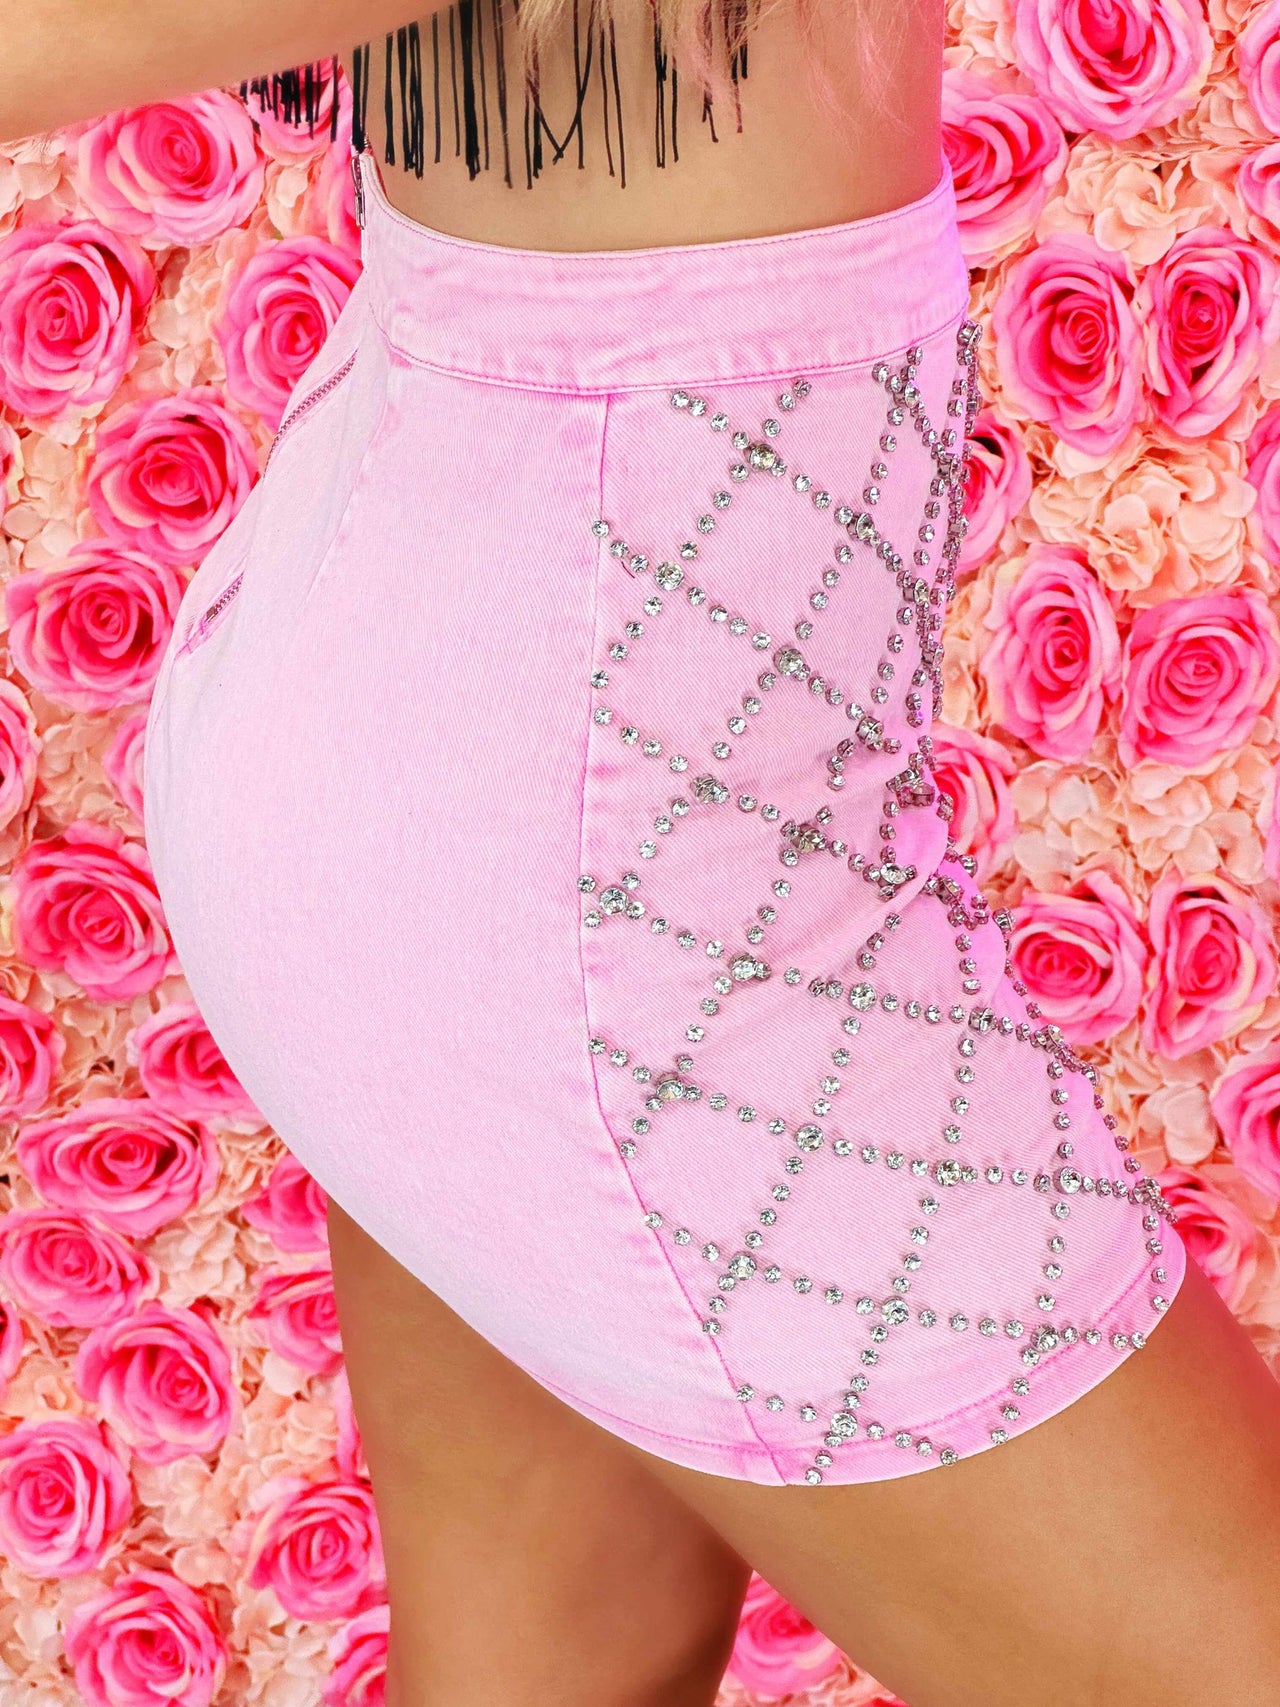 Pink jean mini skirt with rhinestones.